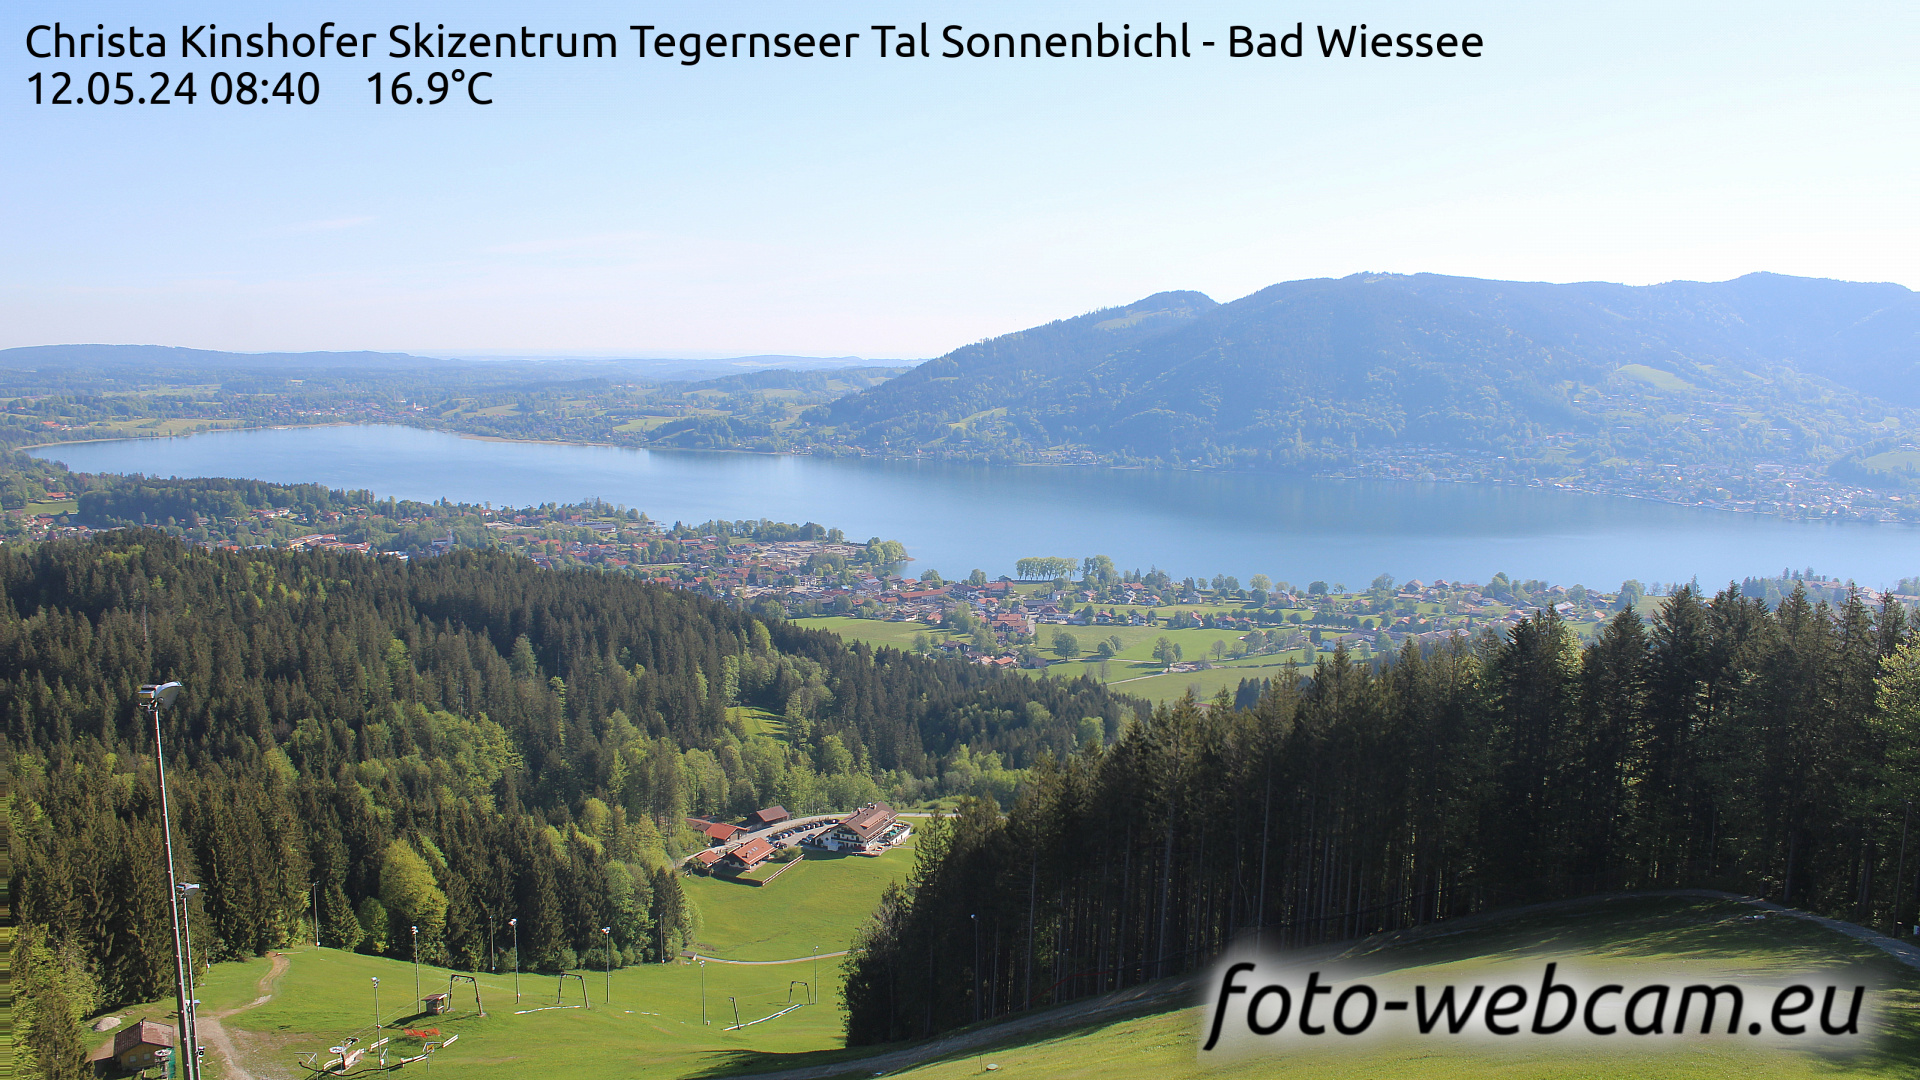 Bad Wiessee Tor. 08:46